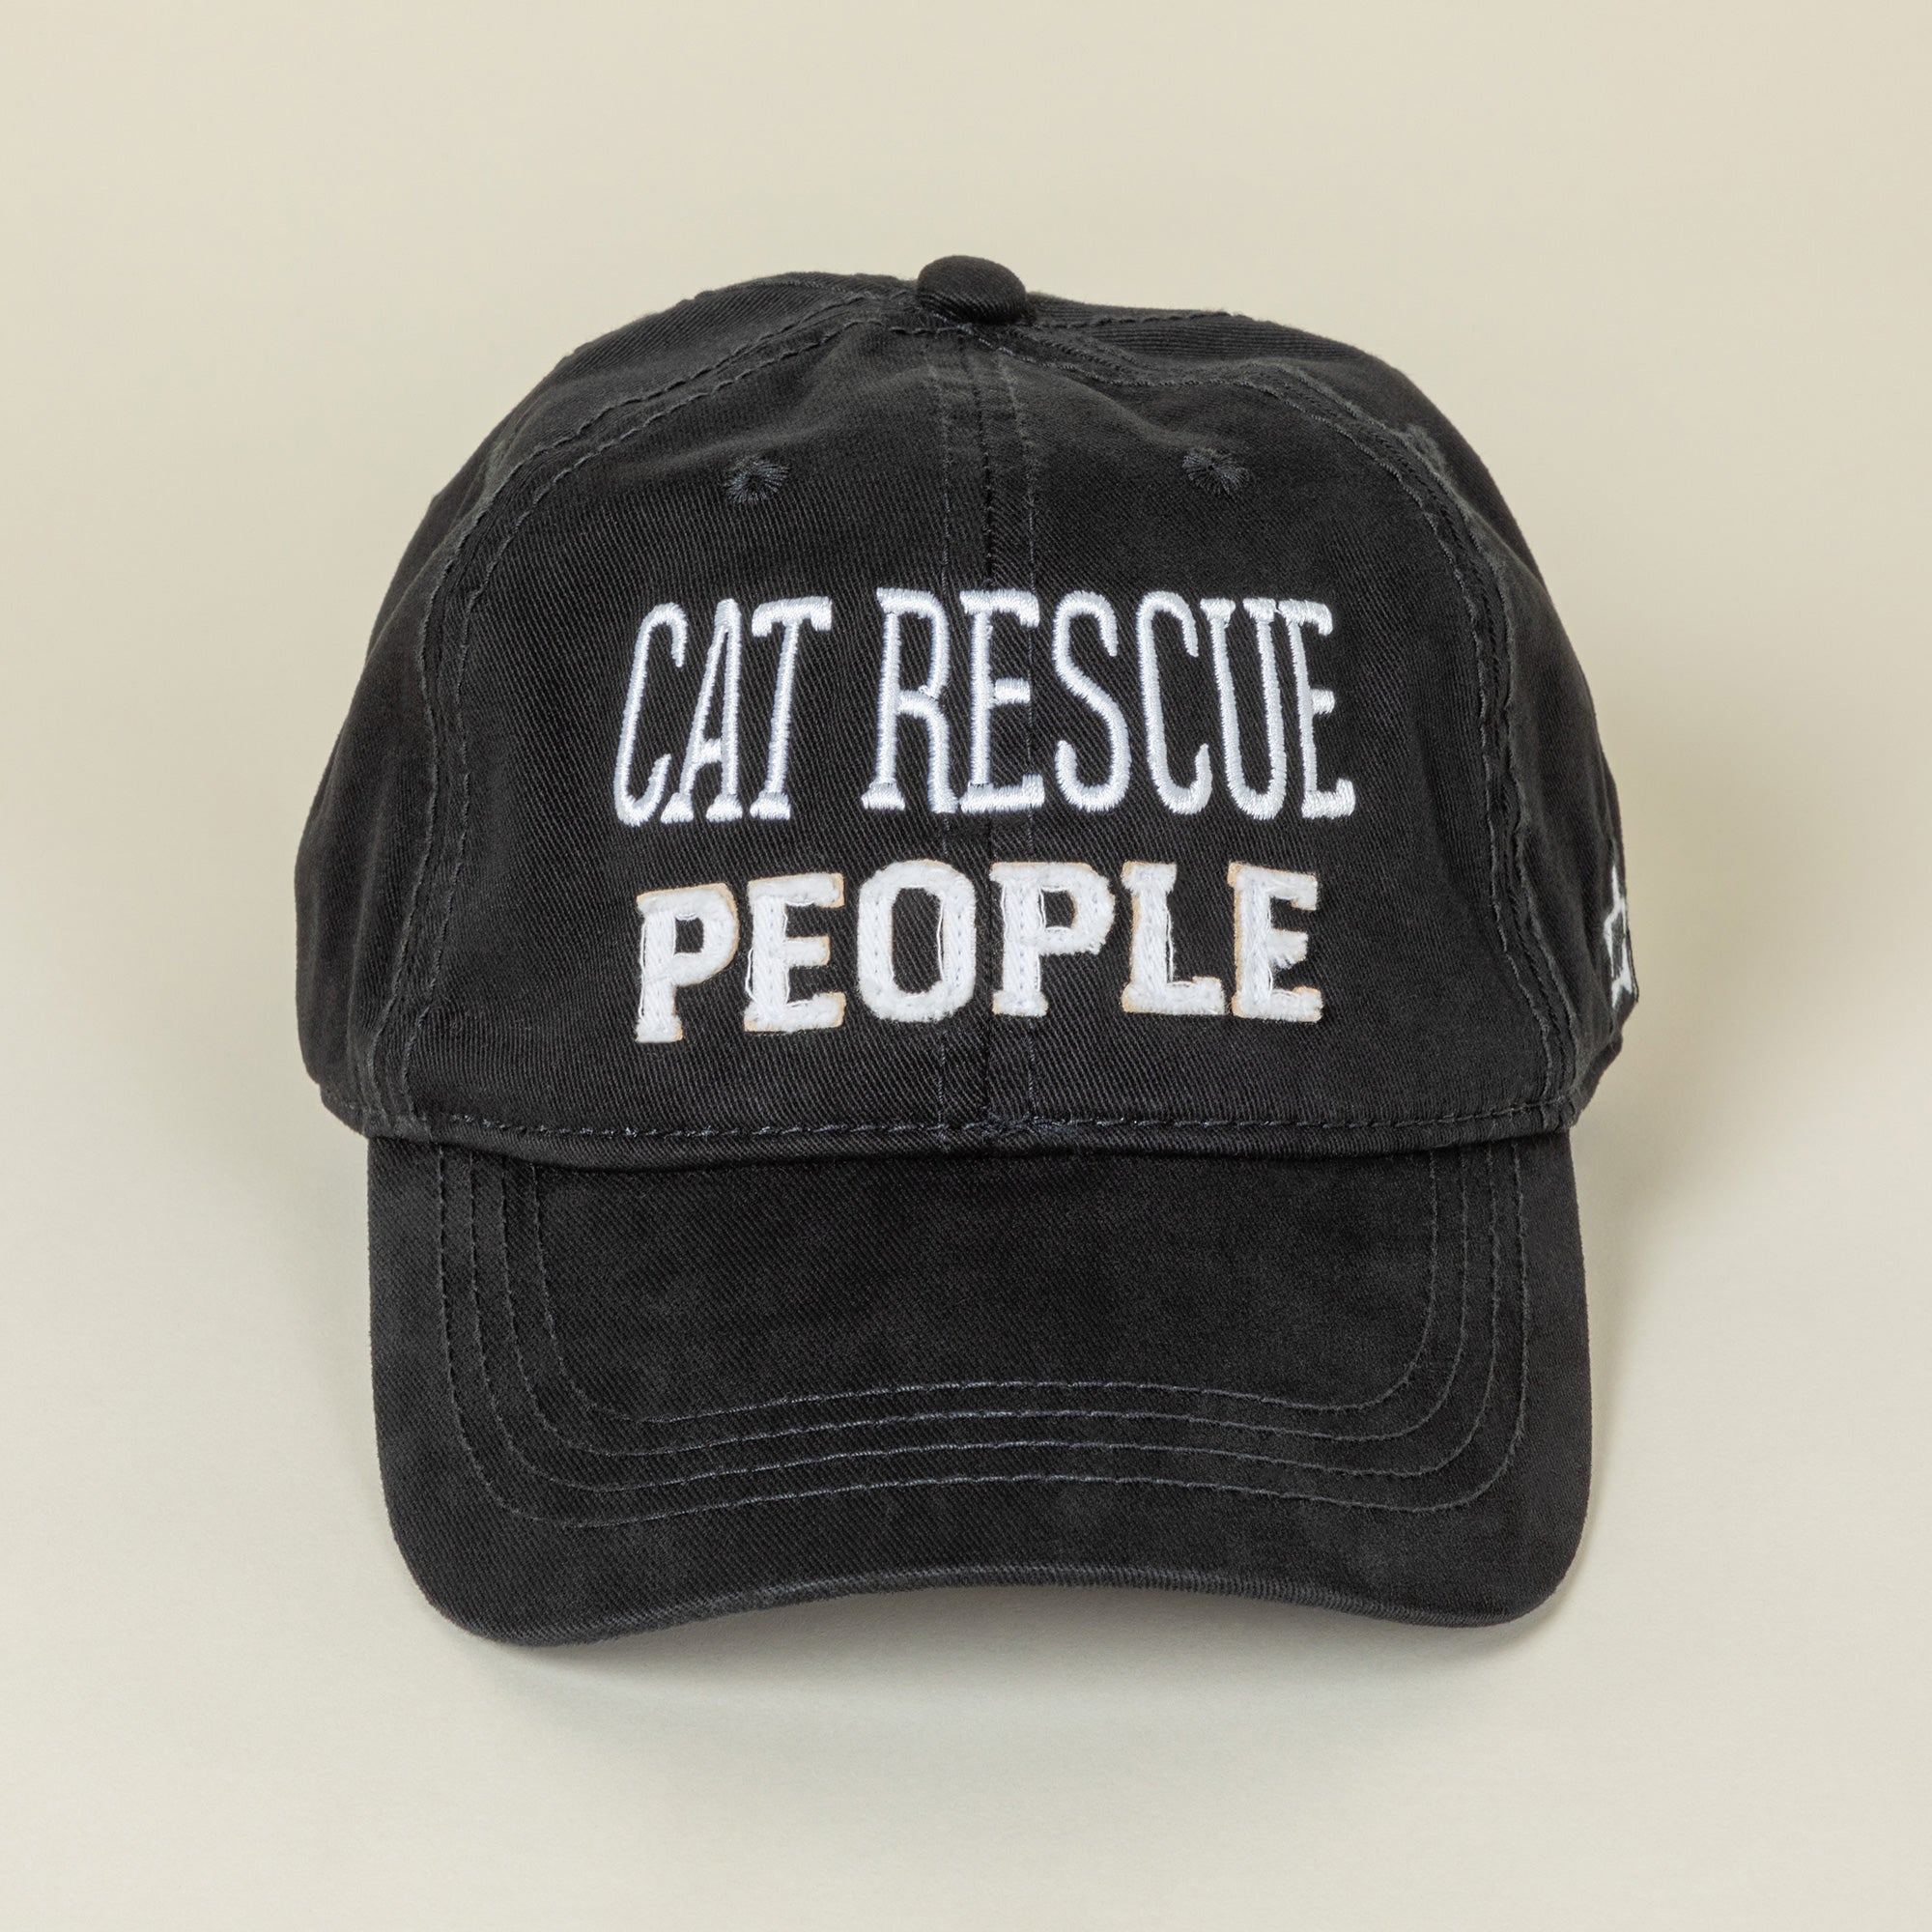 Animal Rescue People Baseball Hat - Black - Cat